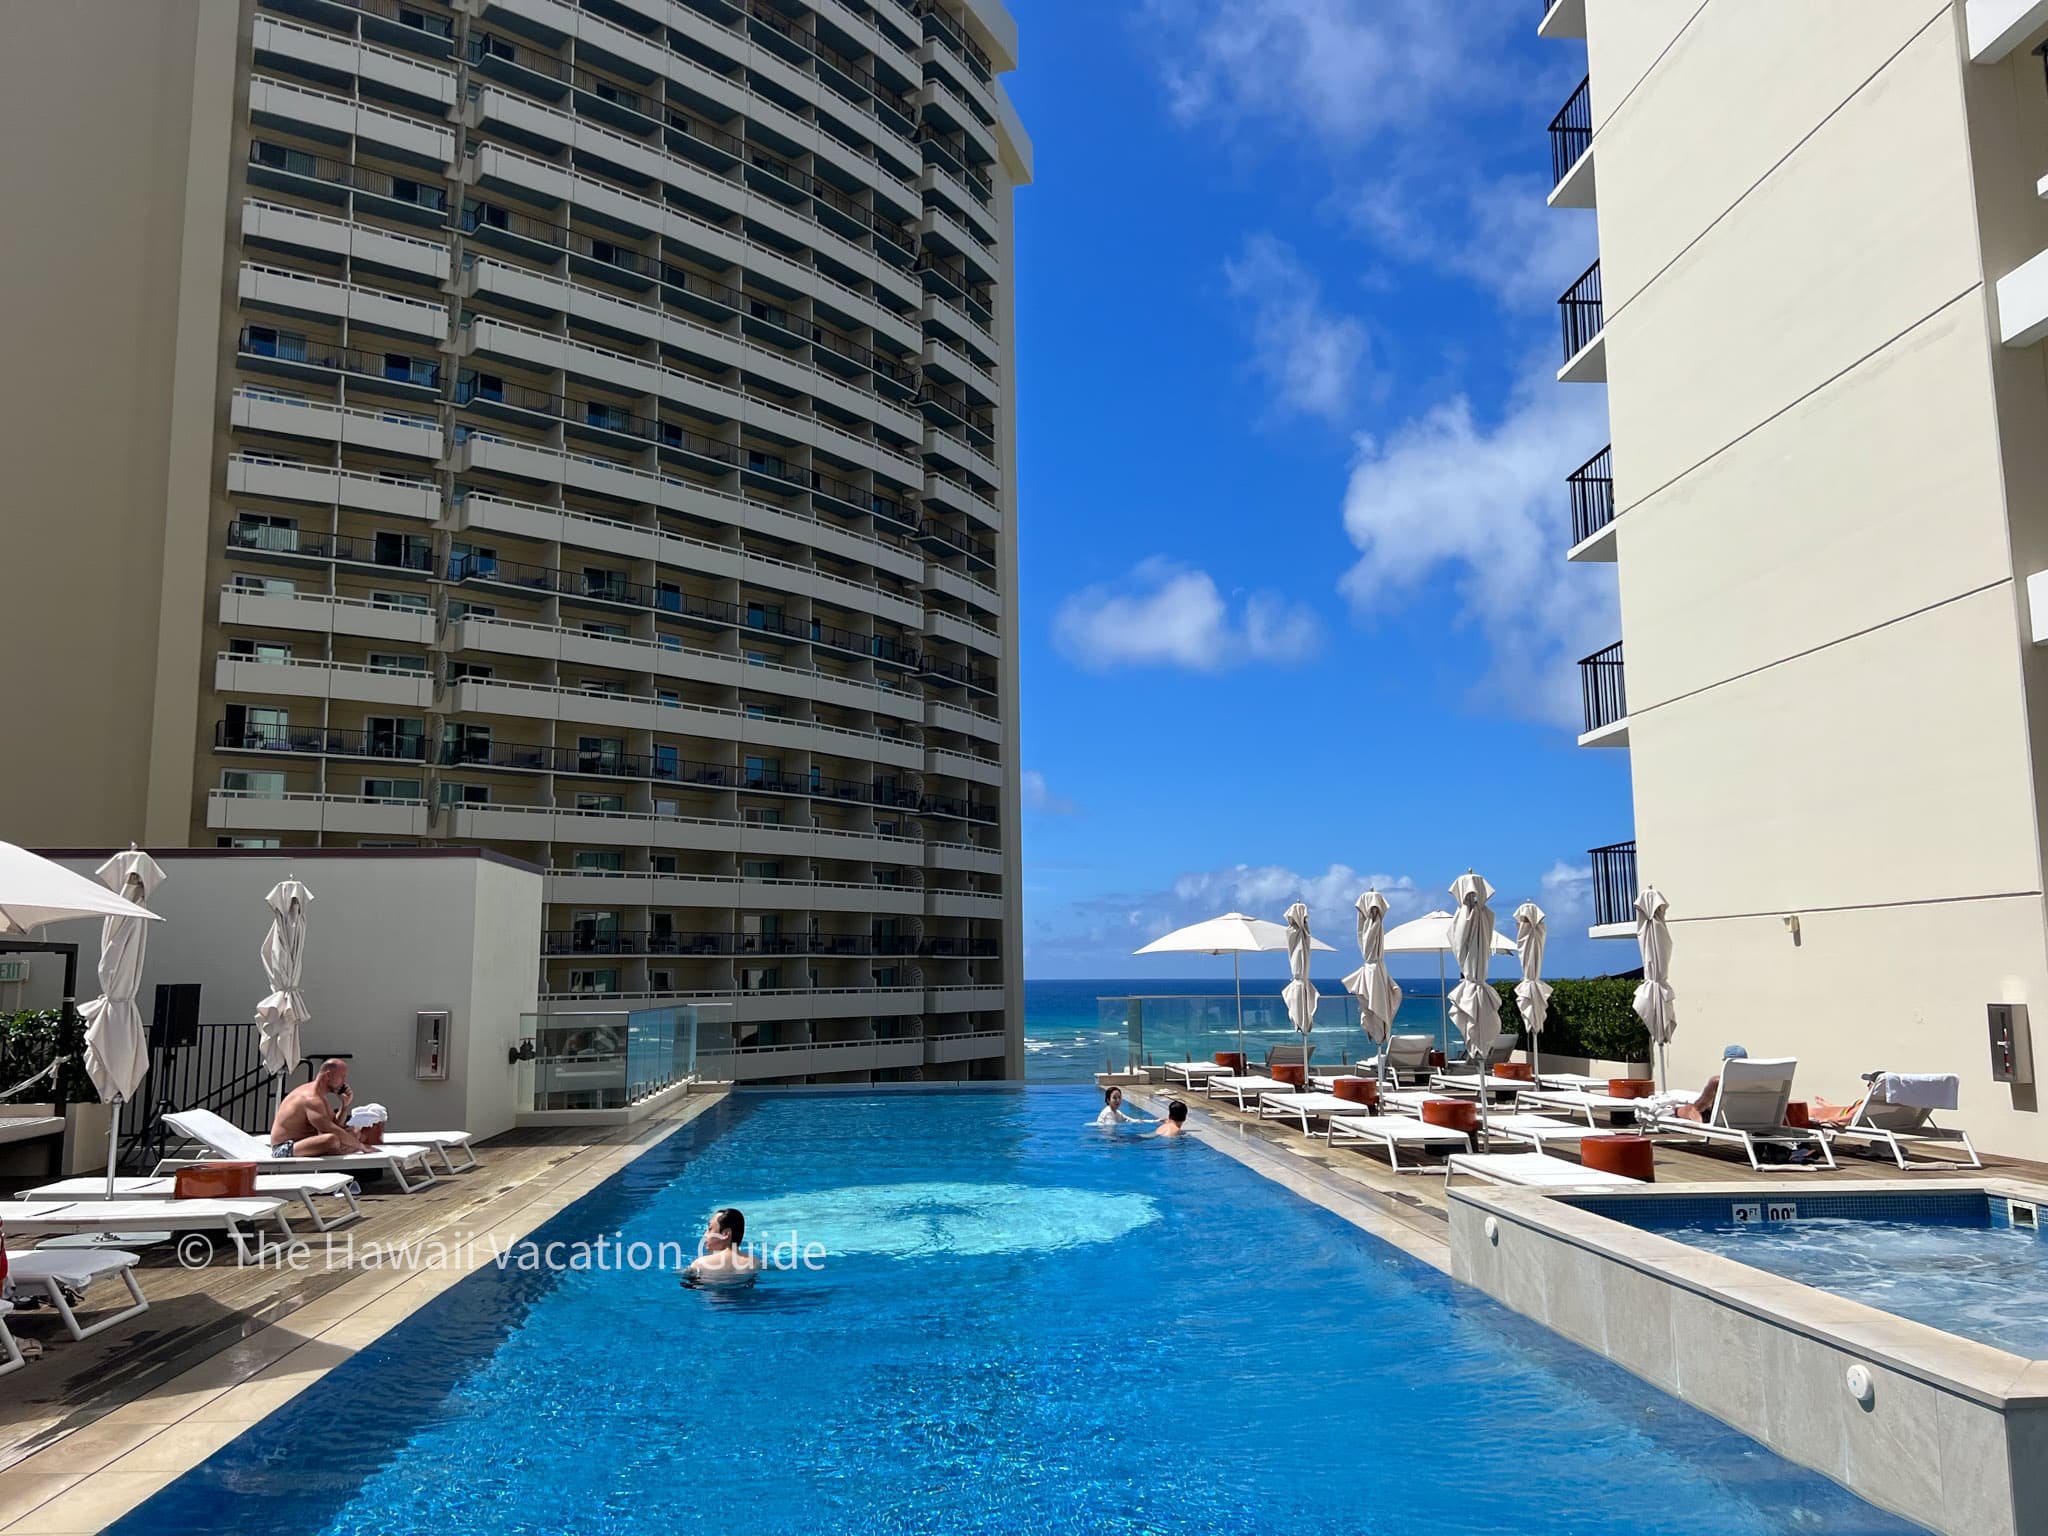 Pool at the Halepuna Hotel Waikiki